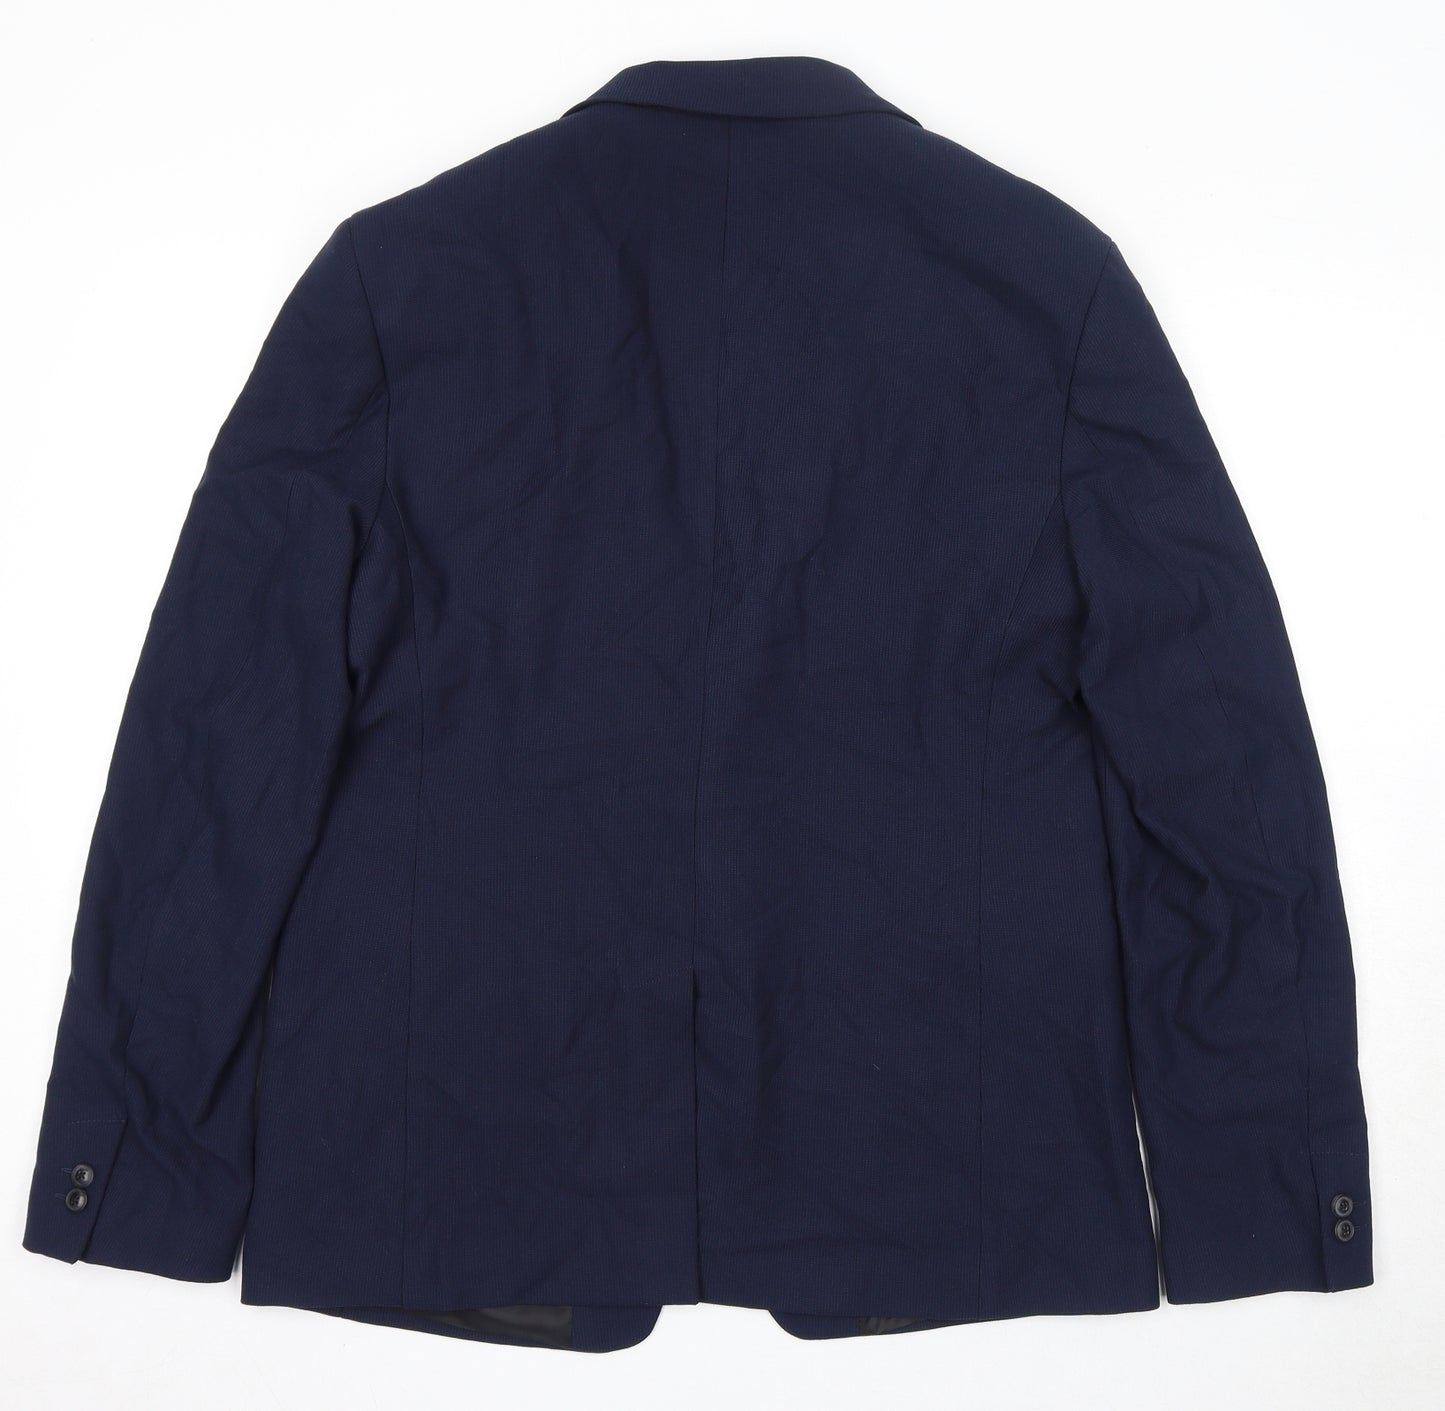 Zara Mens Blue Polyester Jacket Suit Jacket Size L Regular